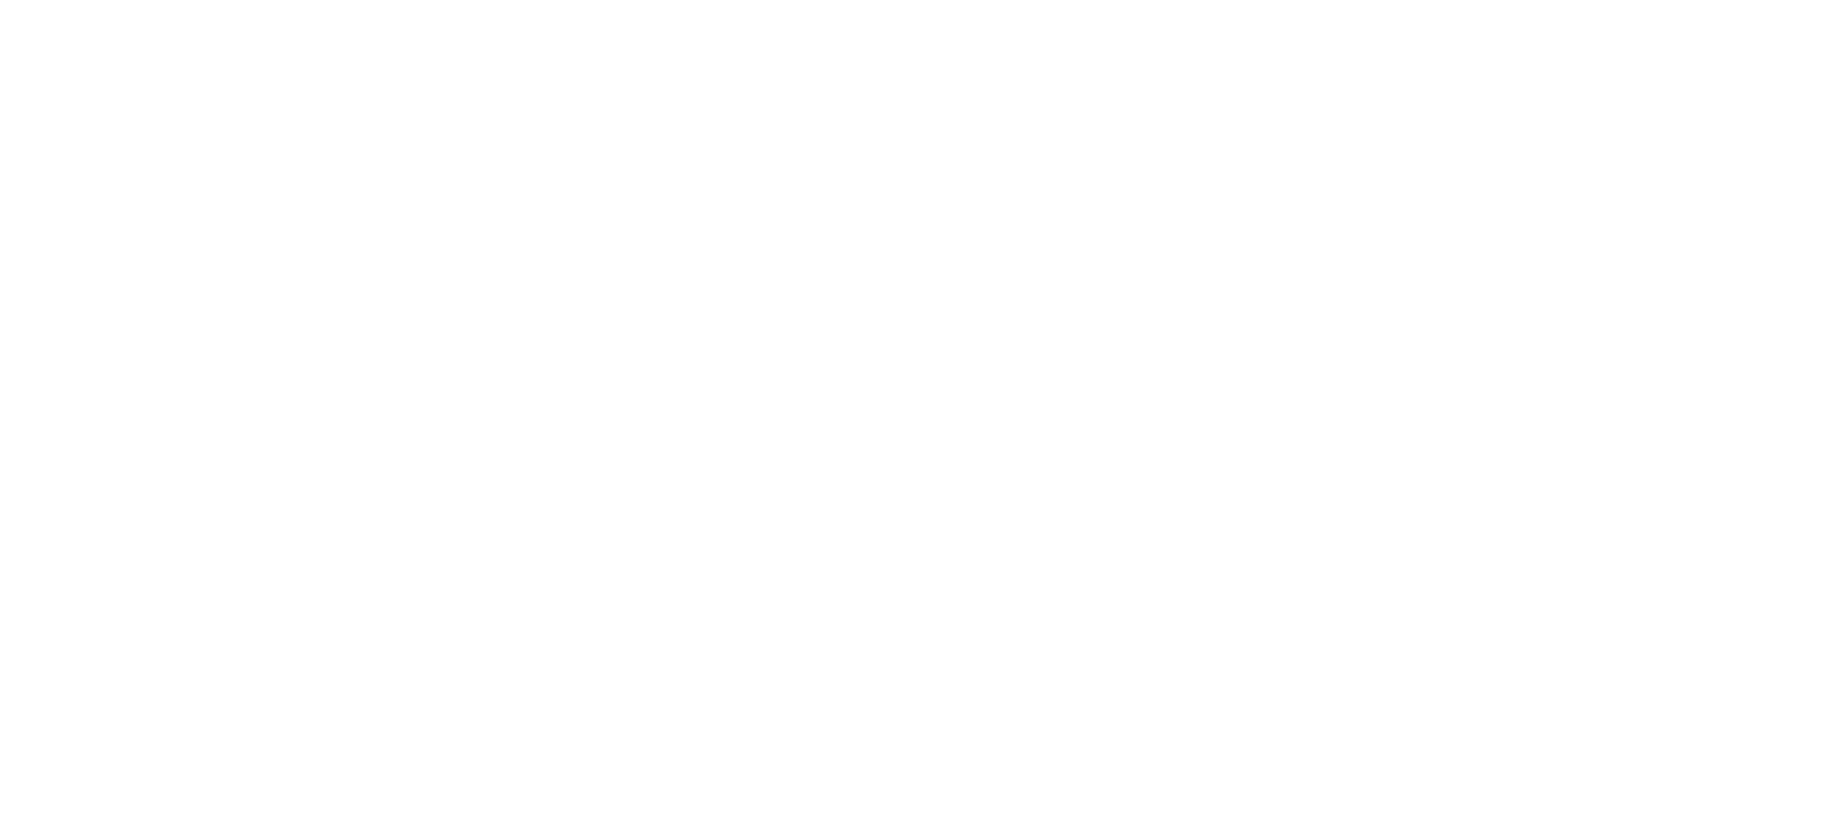 Raaseborg - Rasepori